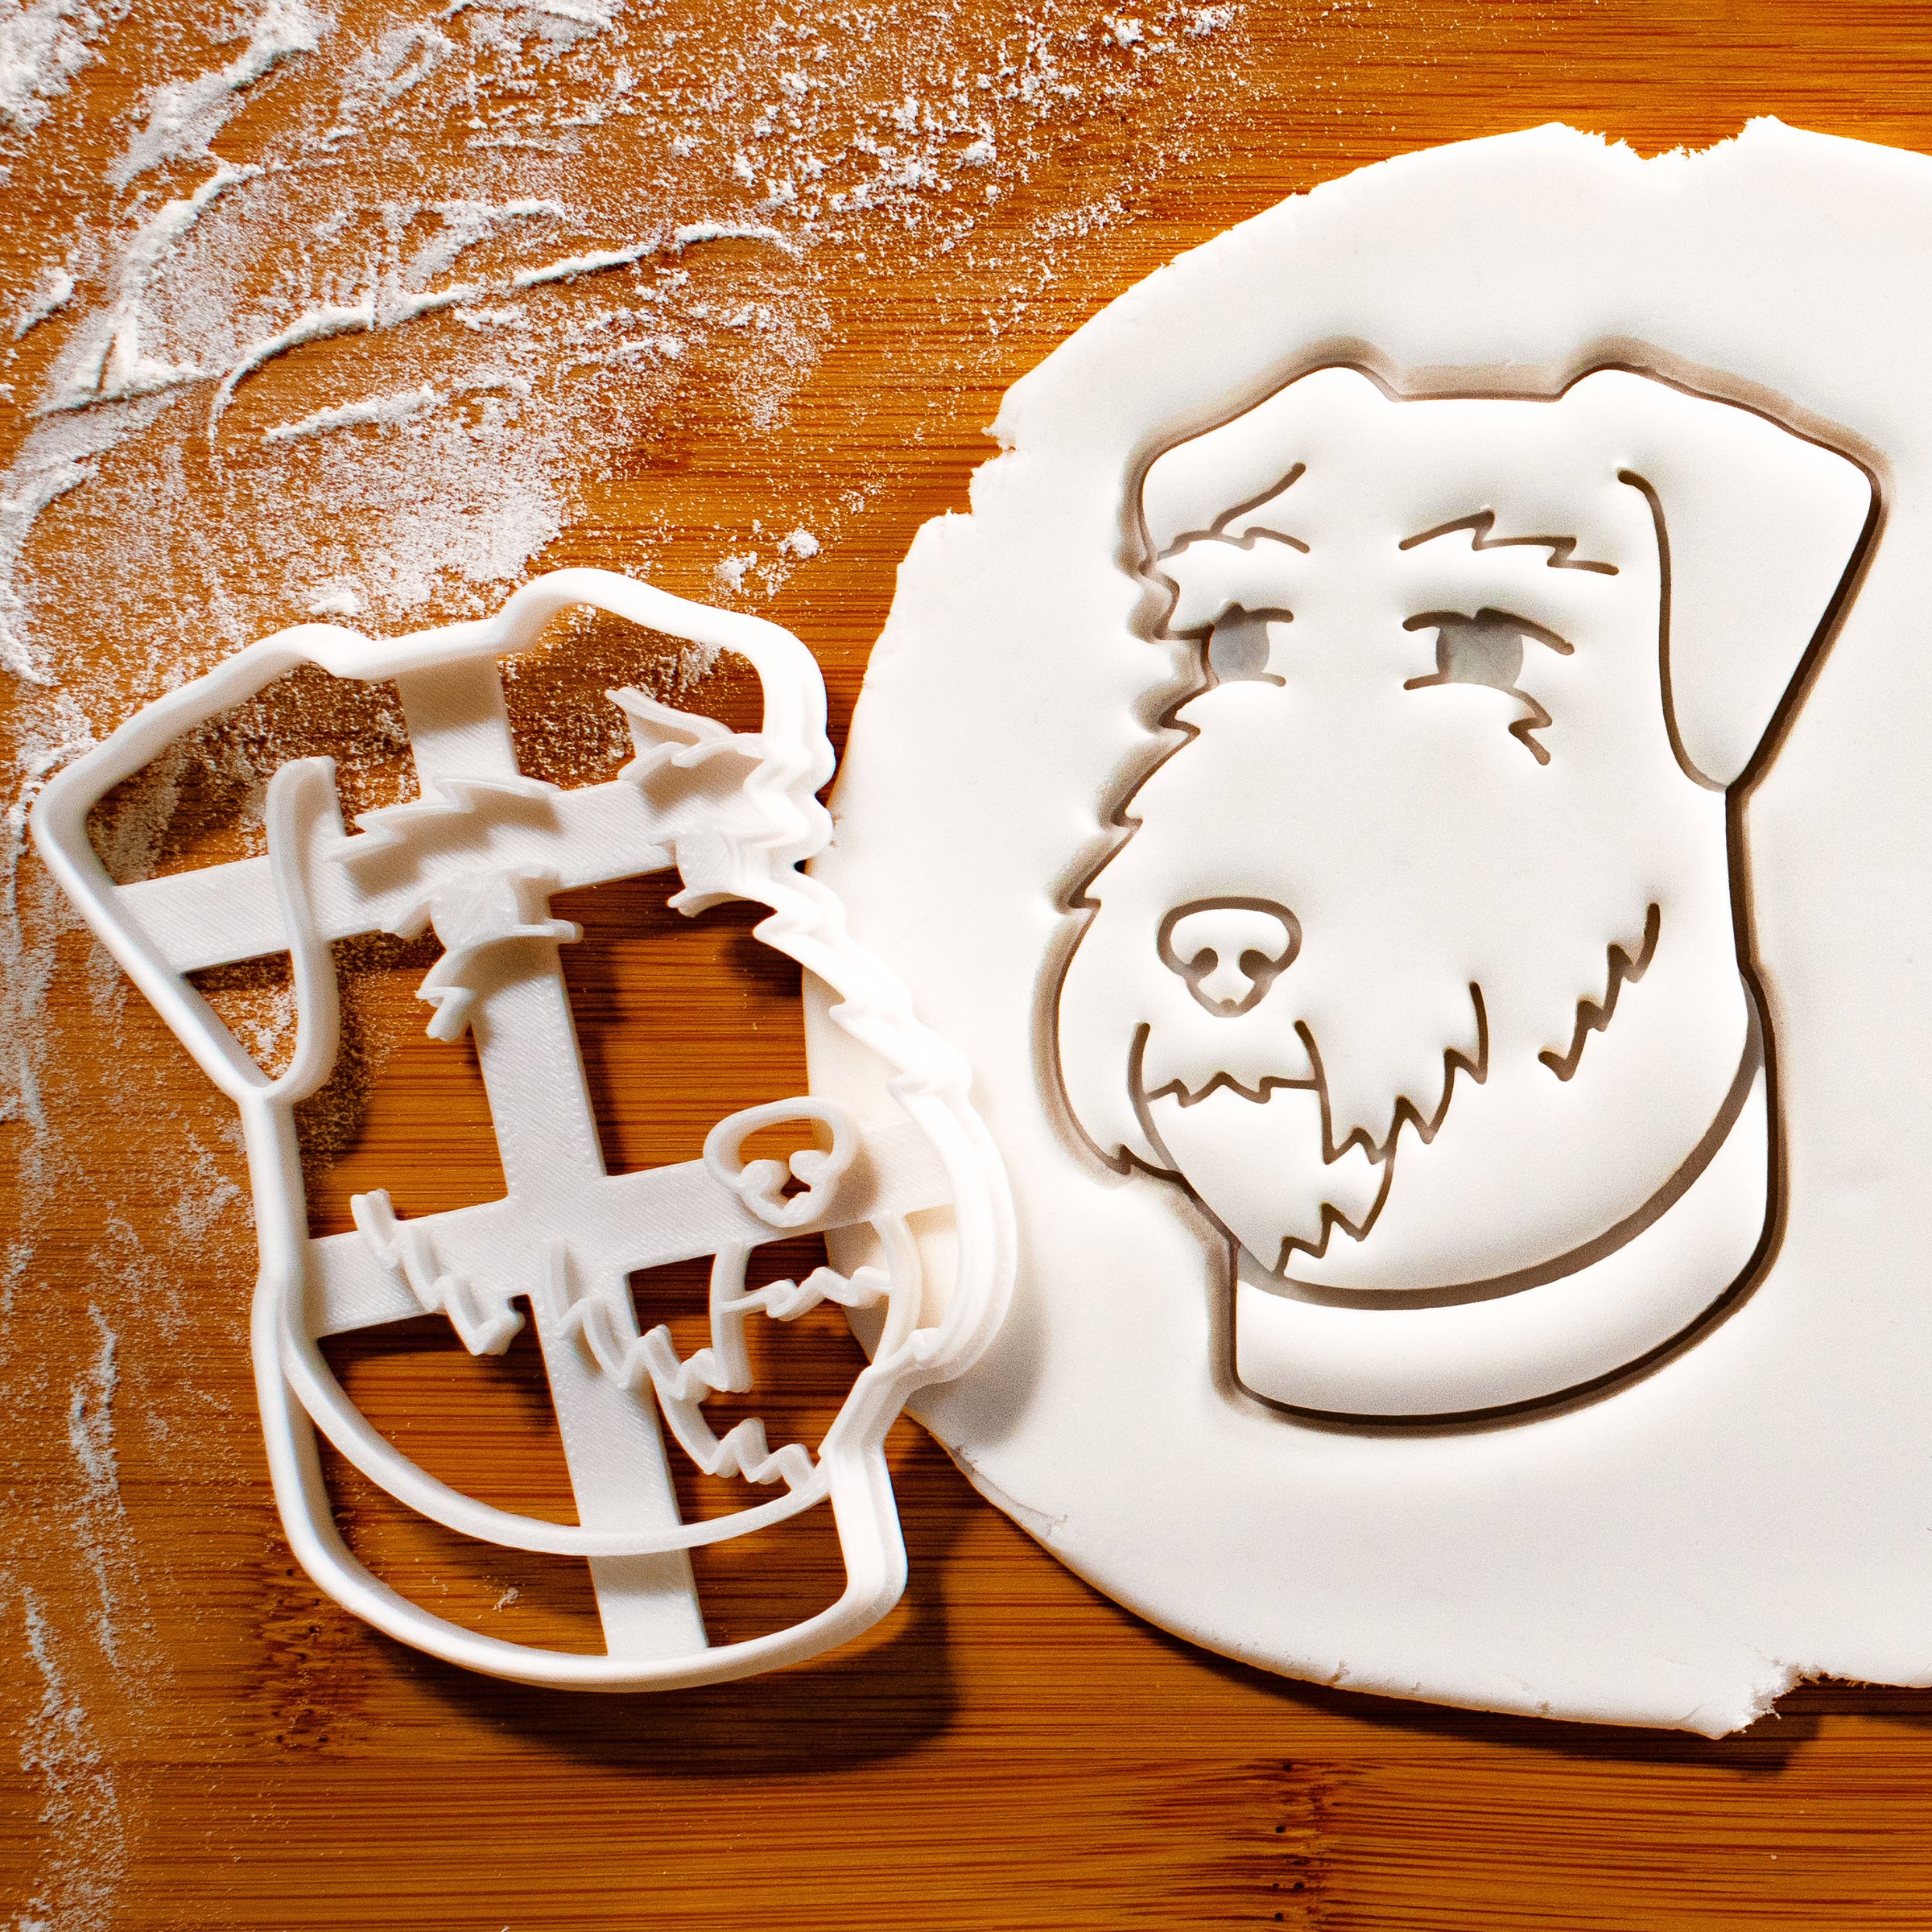 Airedale Terrier portrait cookie cutter